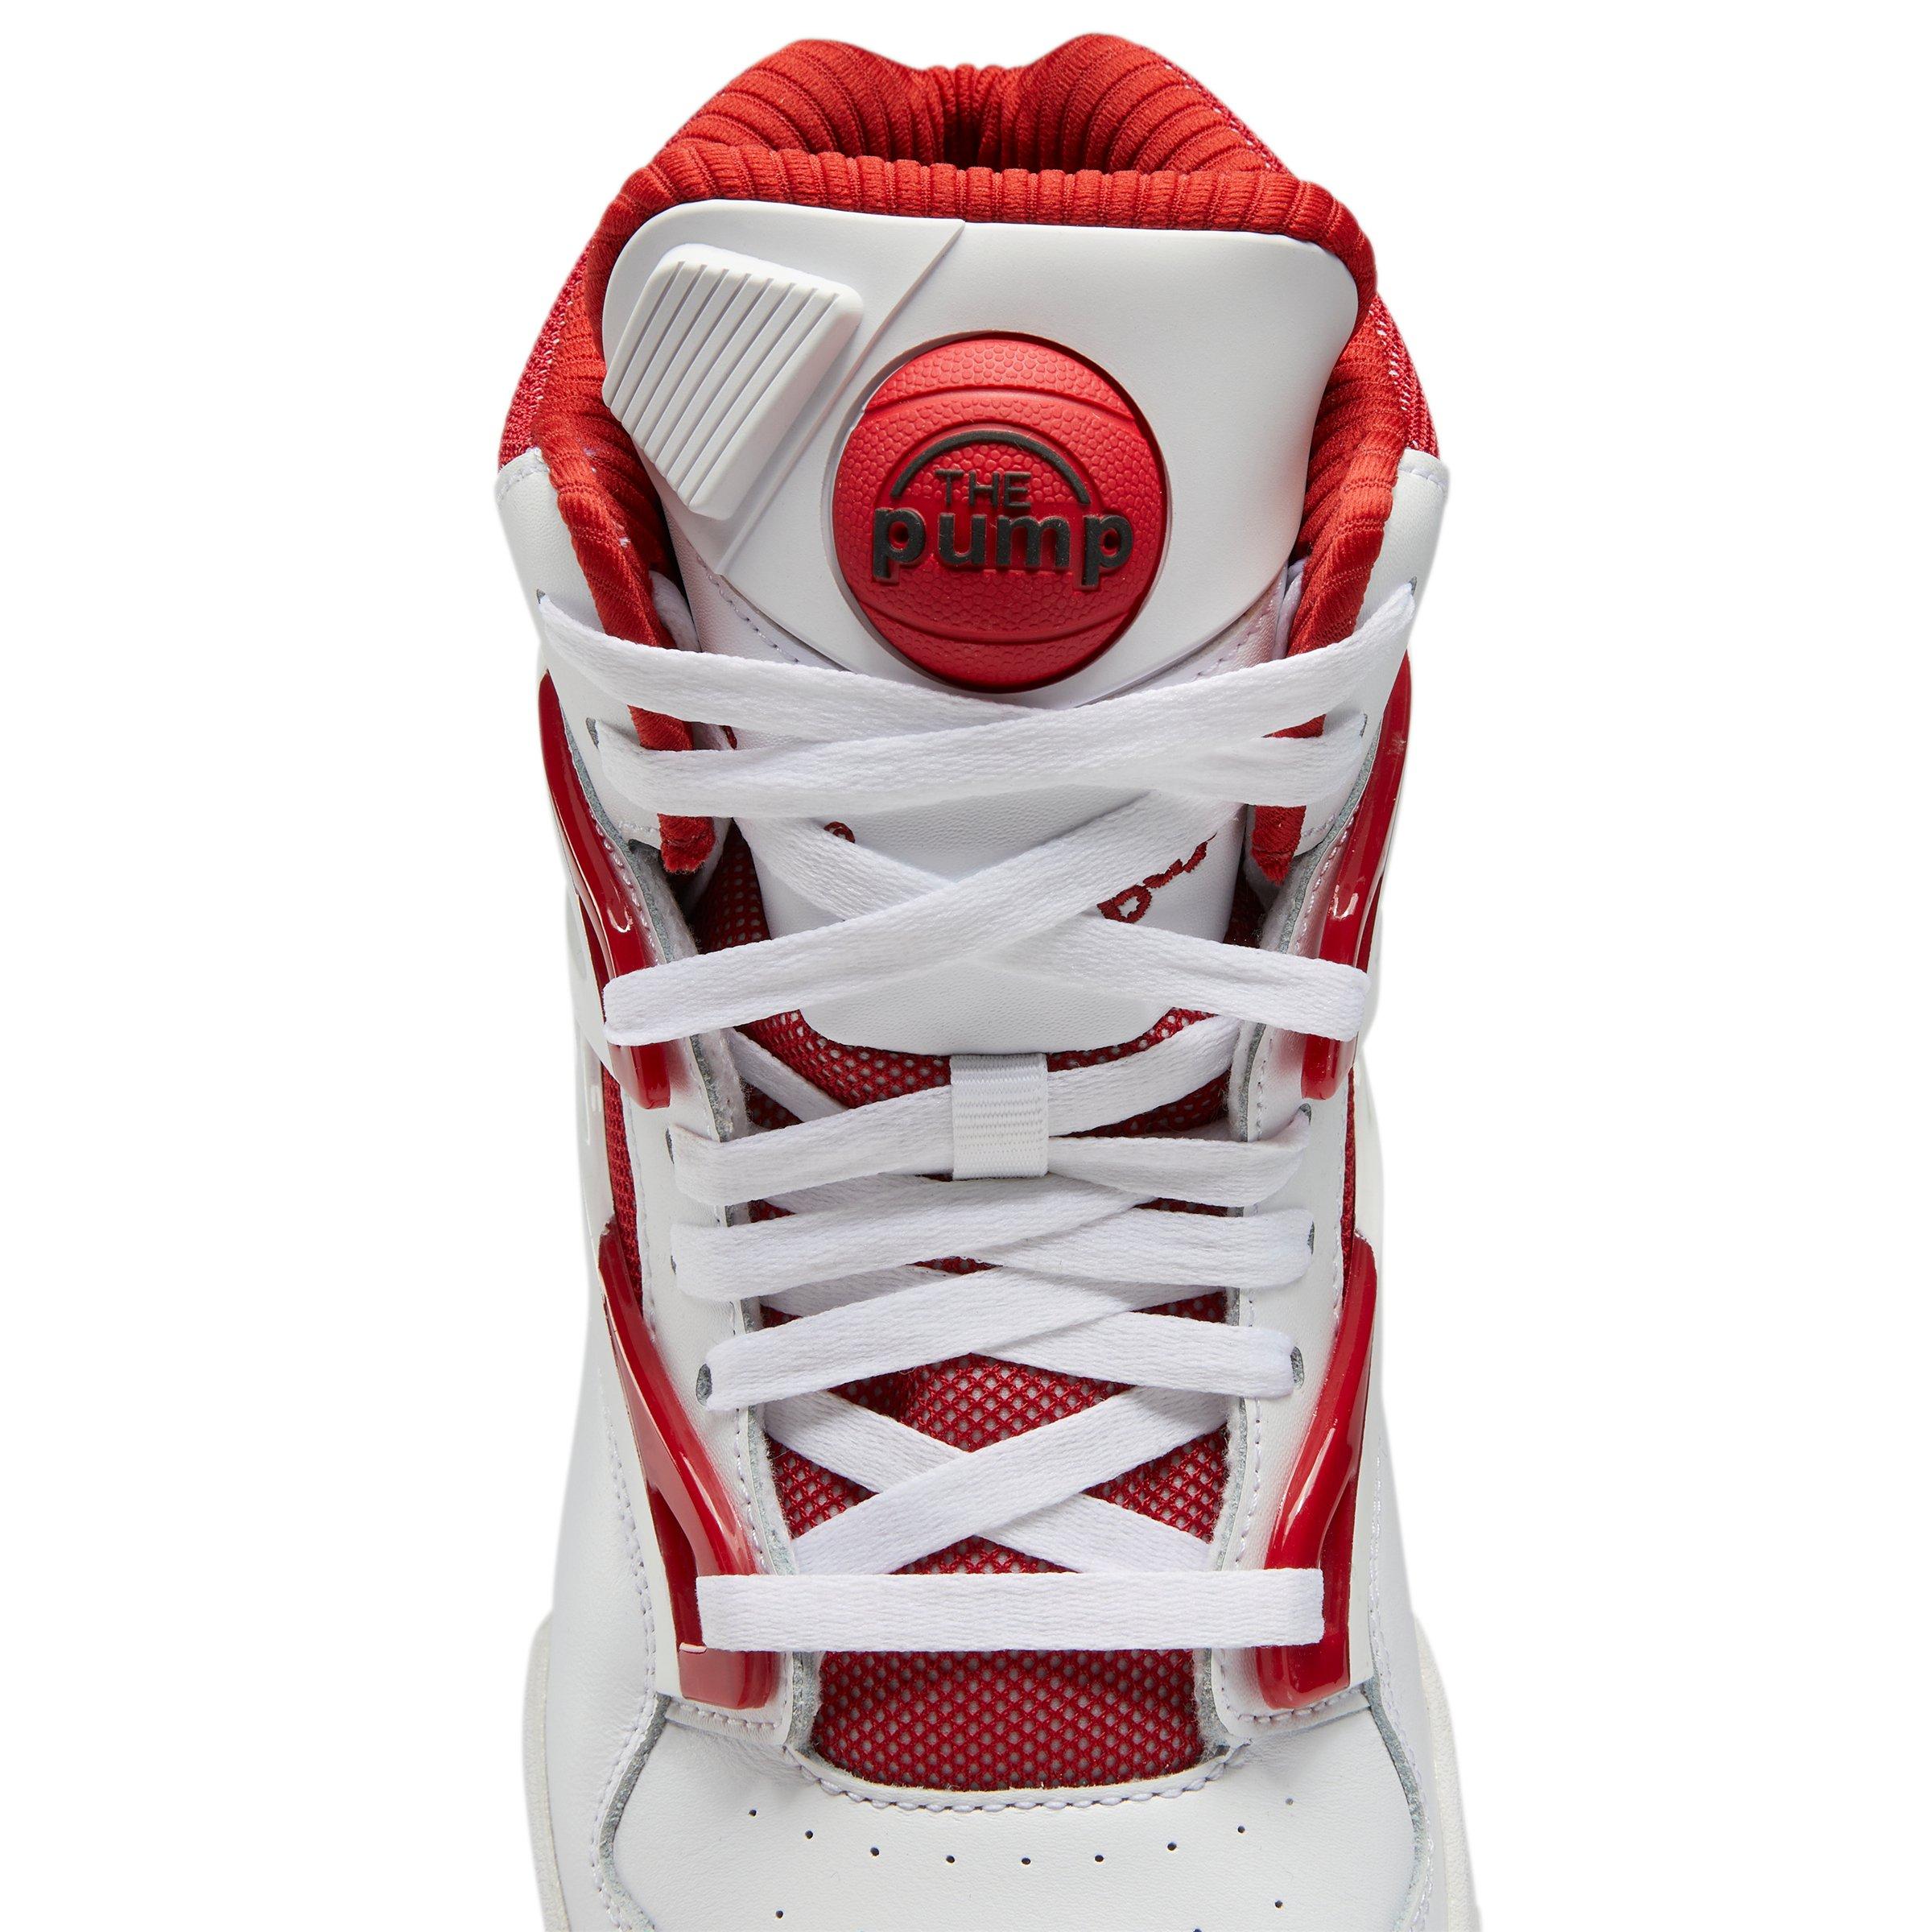 Reebok Pump Omni II "White/Red/Black" Men's Basketball Shoe